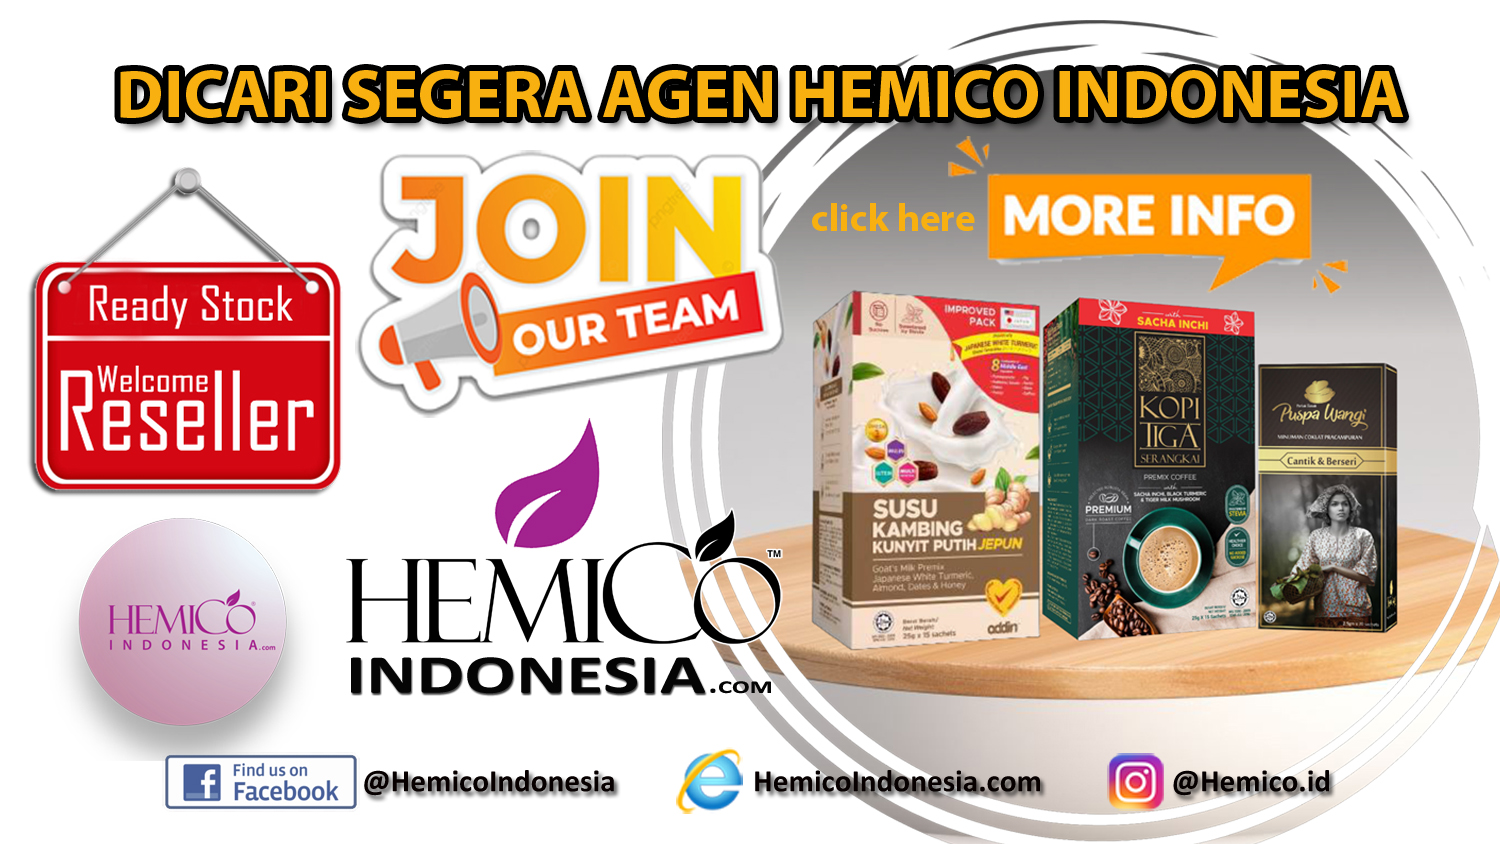 Hemico Indonesia